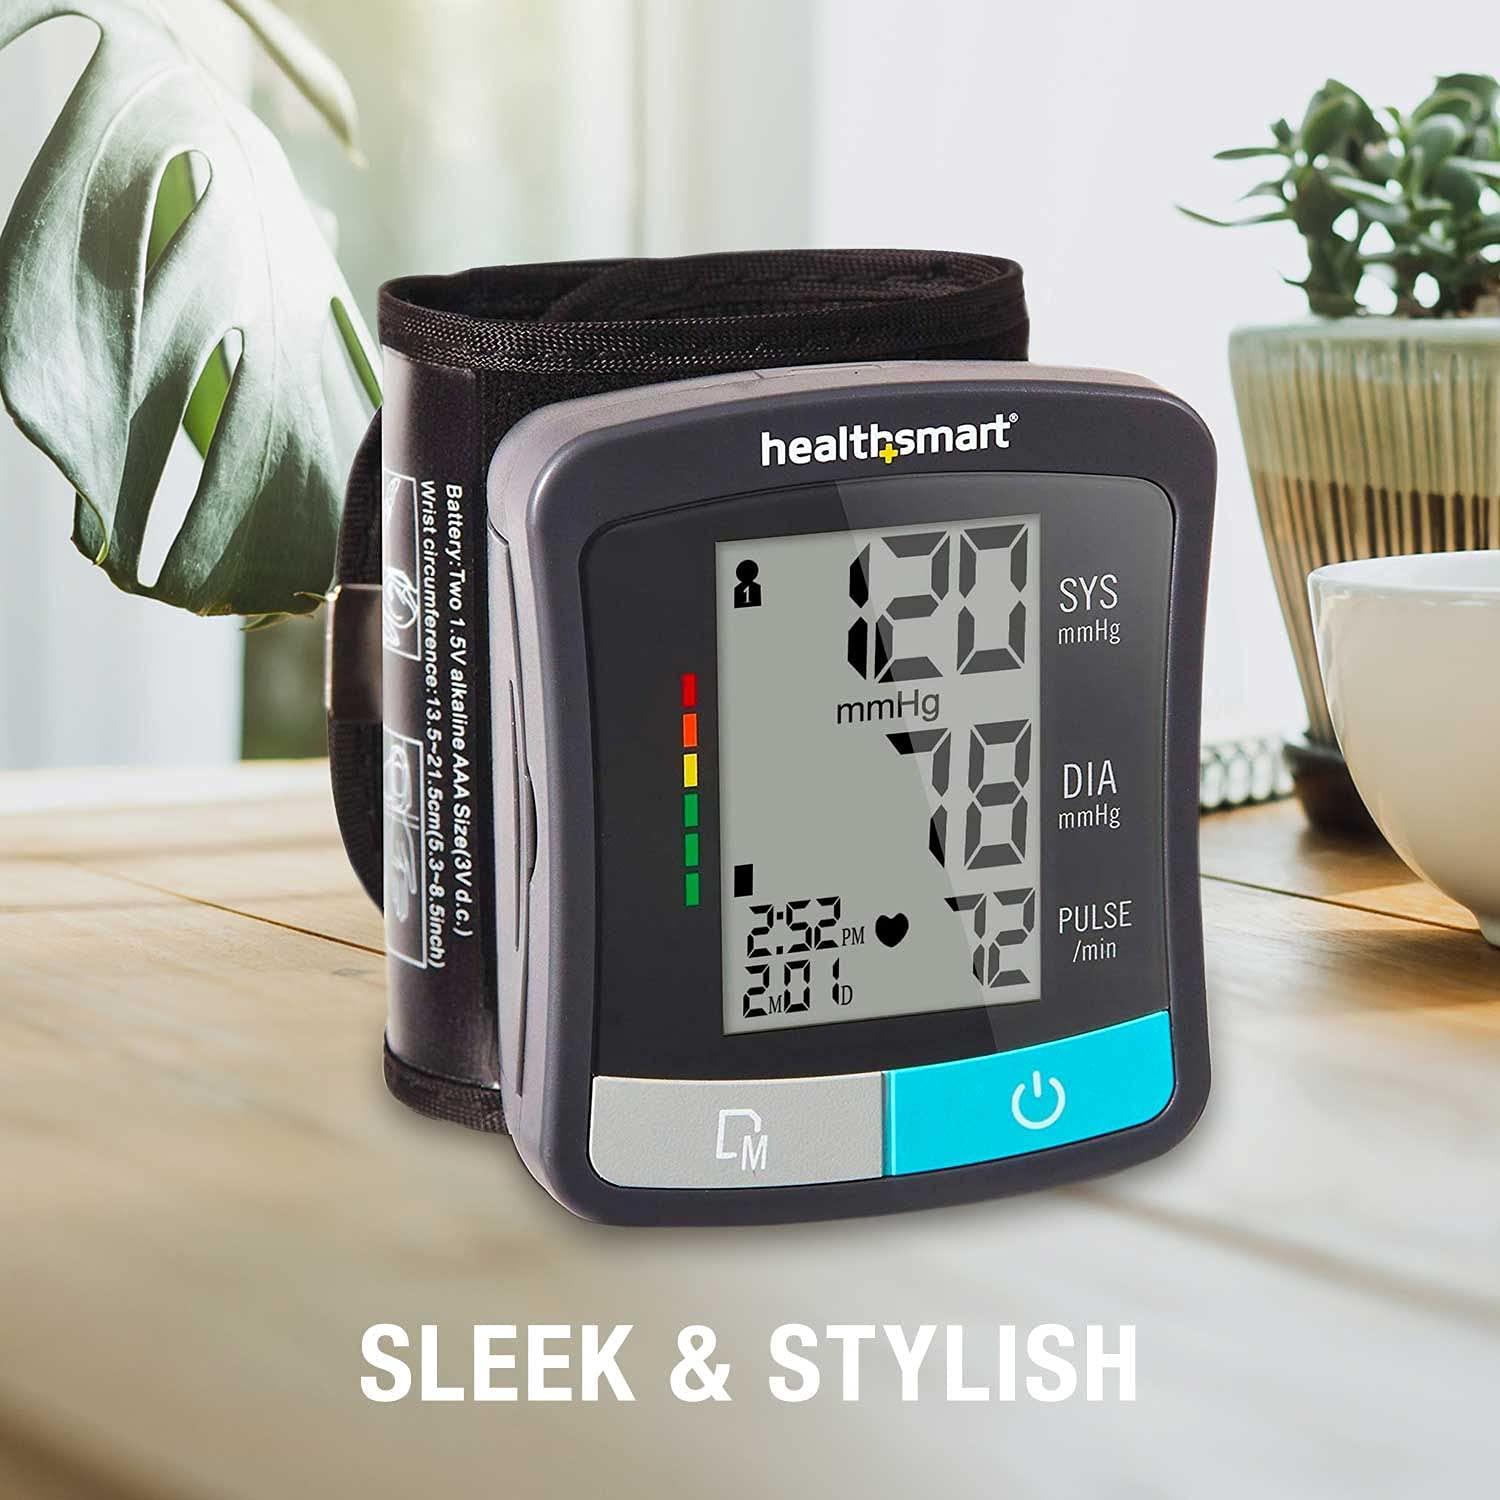 HealthSmart Standard Arm Blood Pressure Monitor